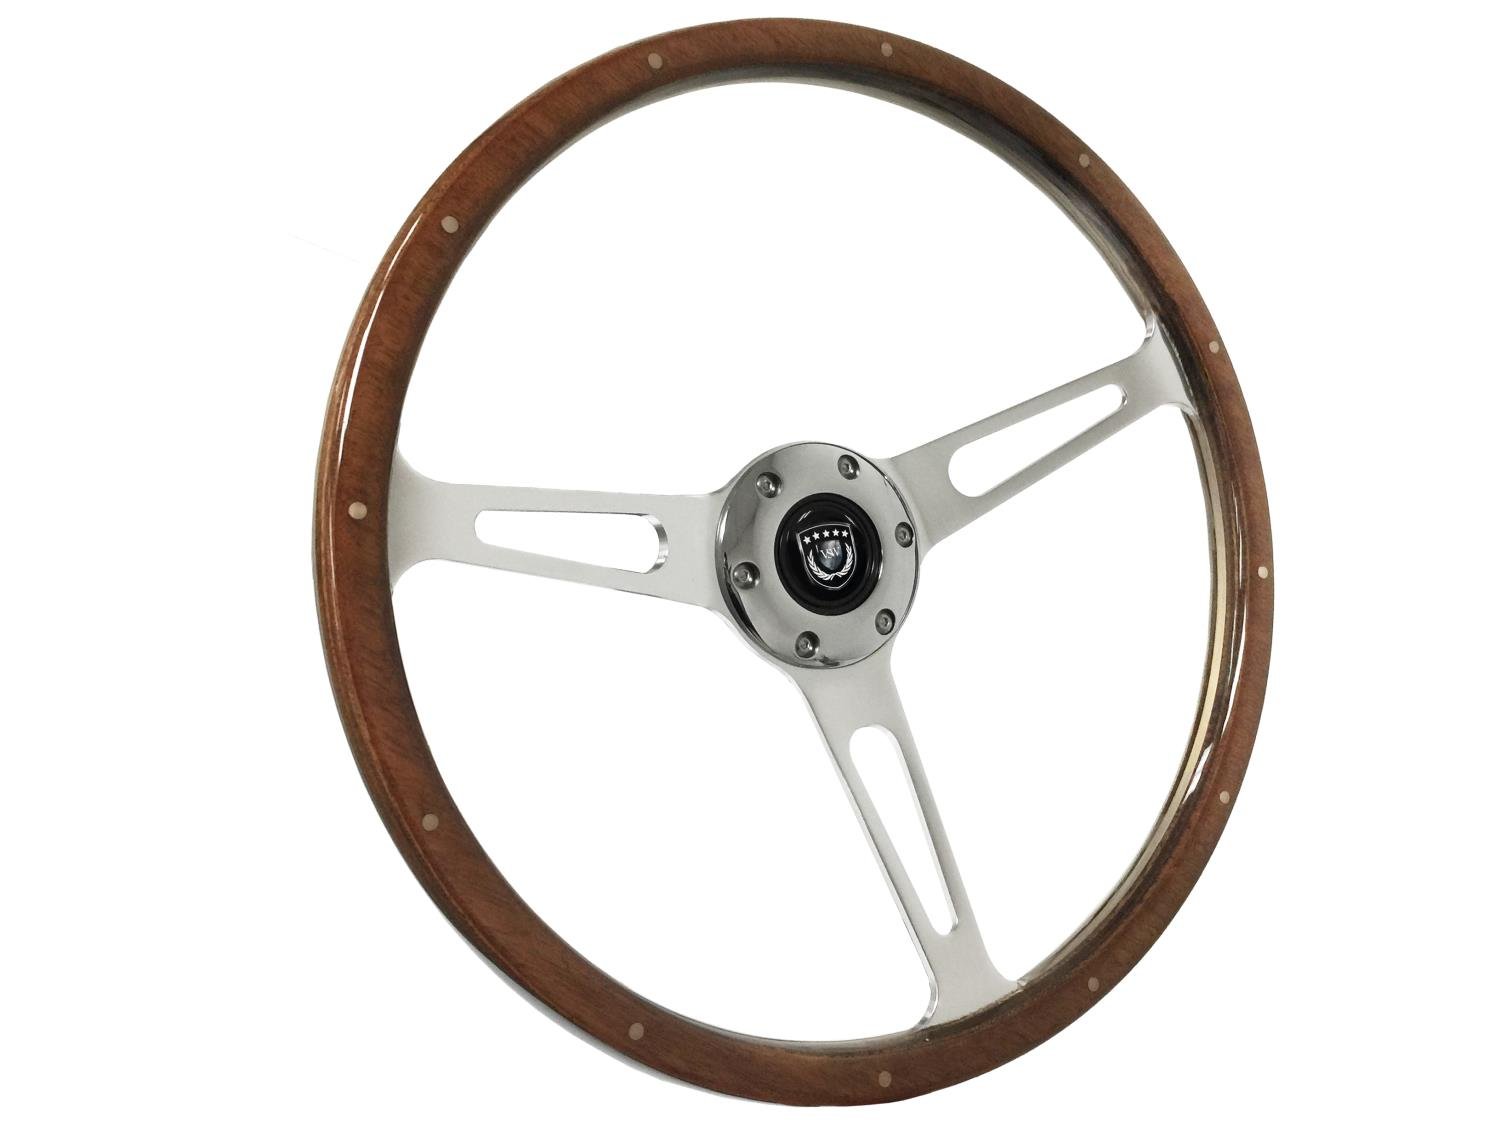 S6 Classic Wood Steering Wheel, 15 in. Diameter, Deluxe Walnut Wood Grip